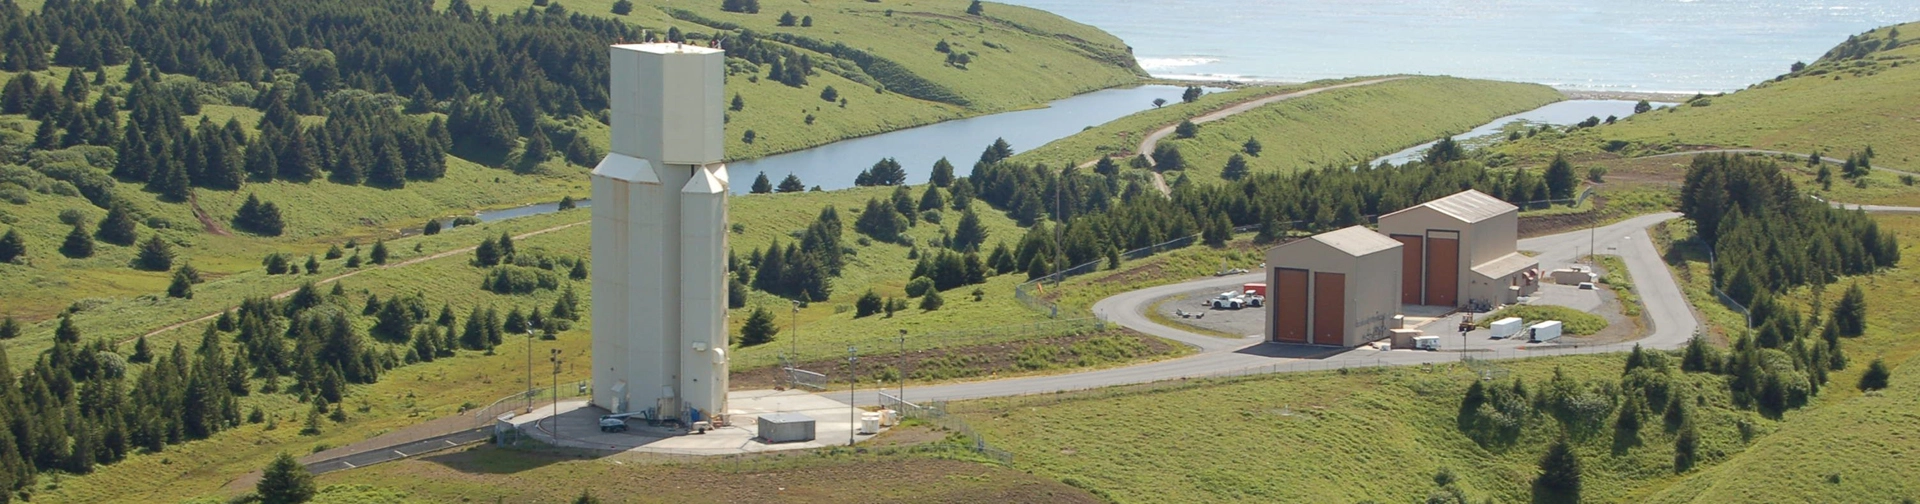 Complexe de lancement à Kodiak